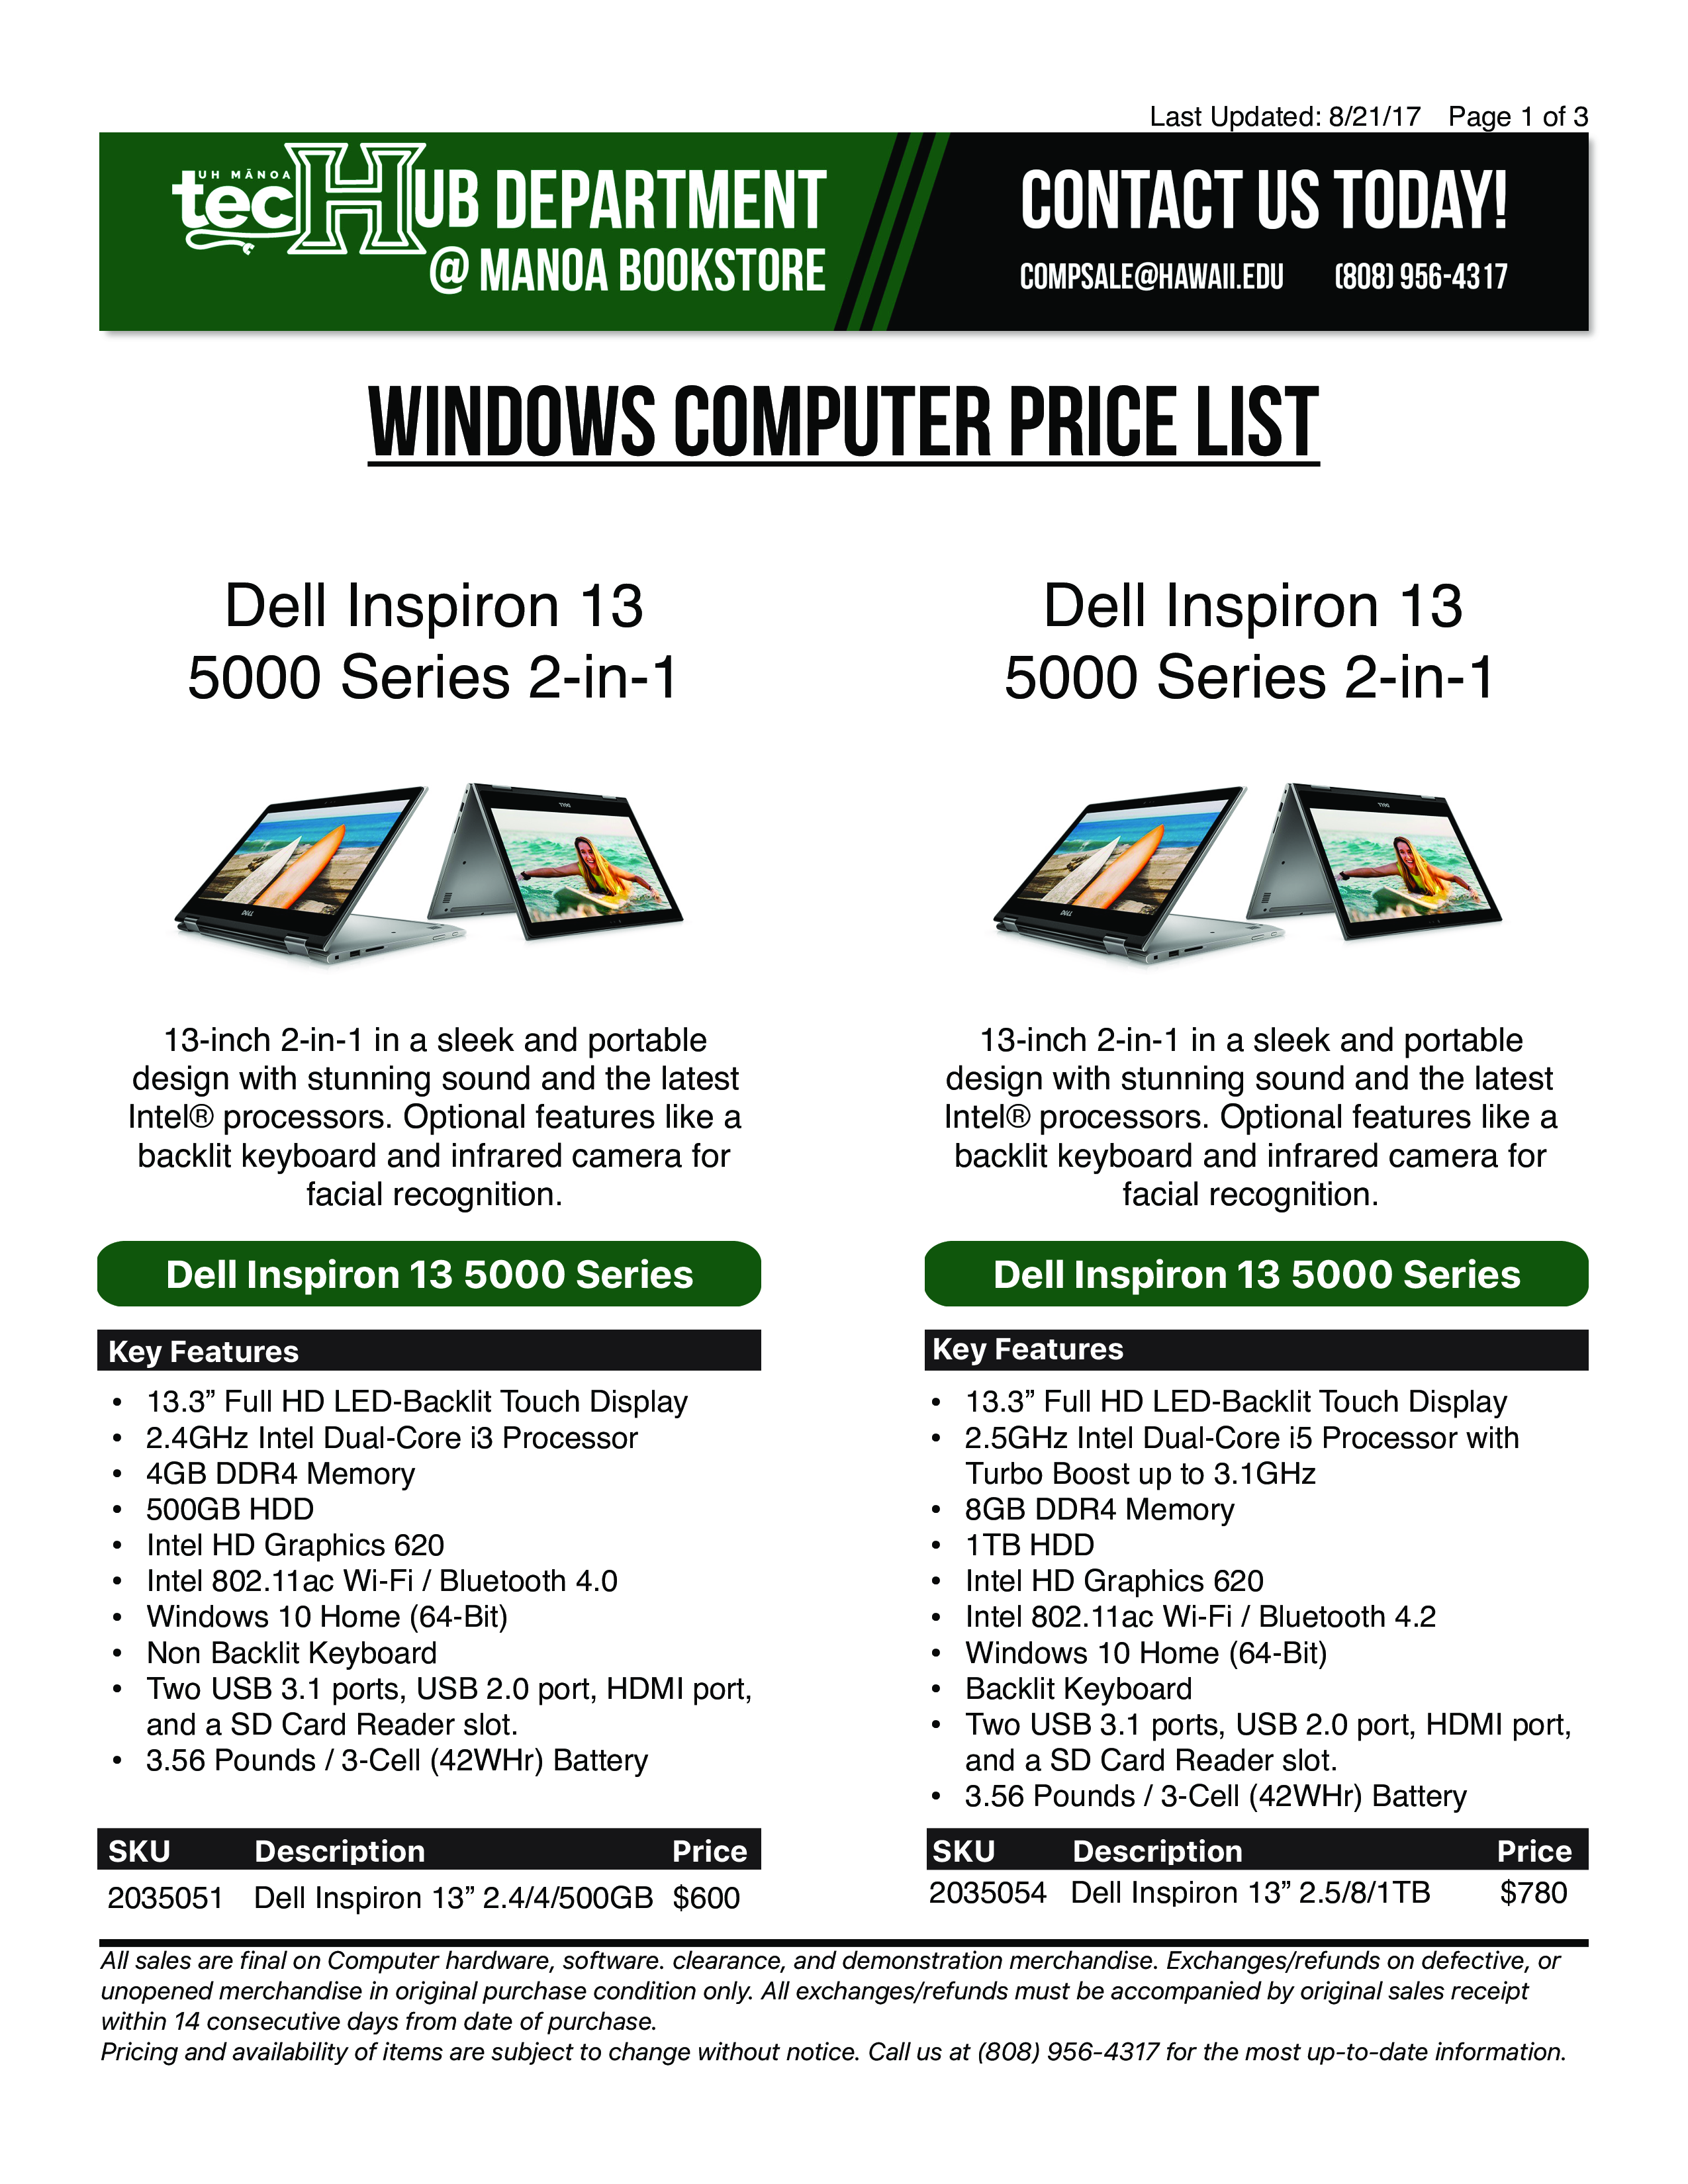 windows computers price list template